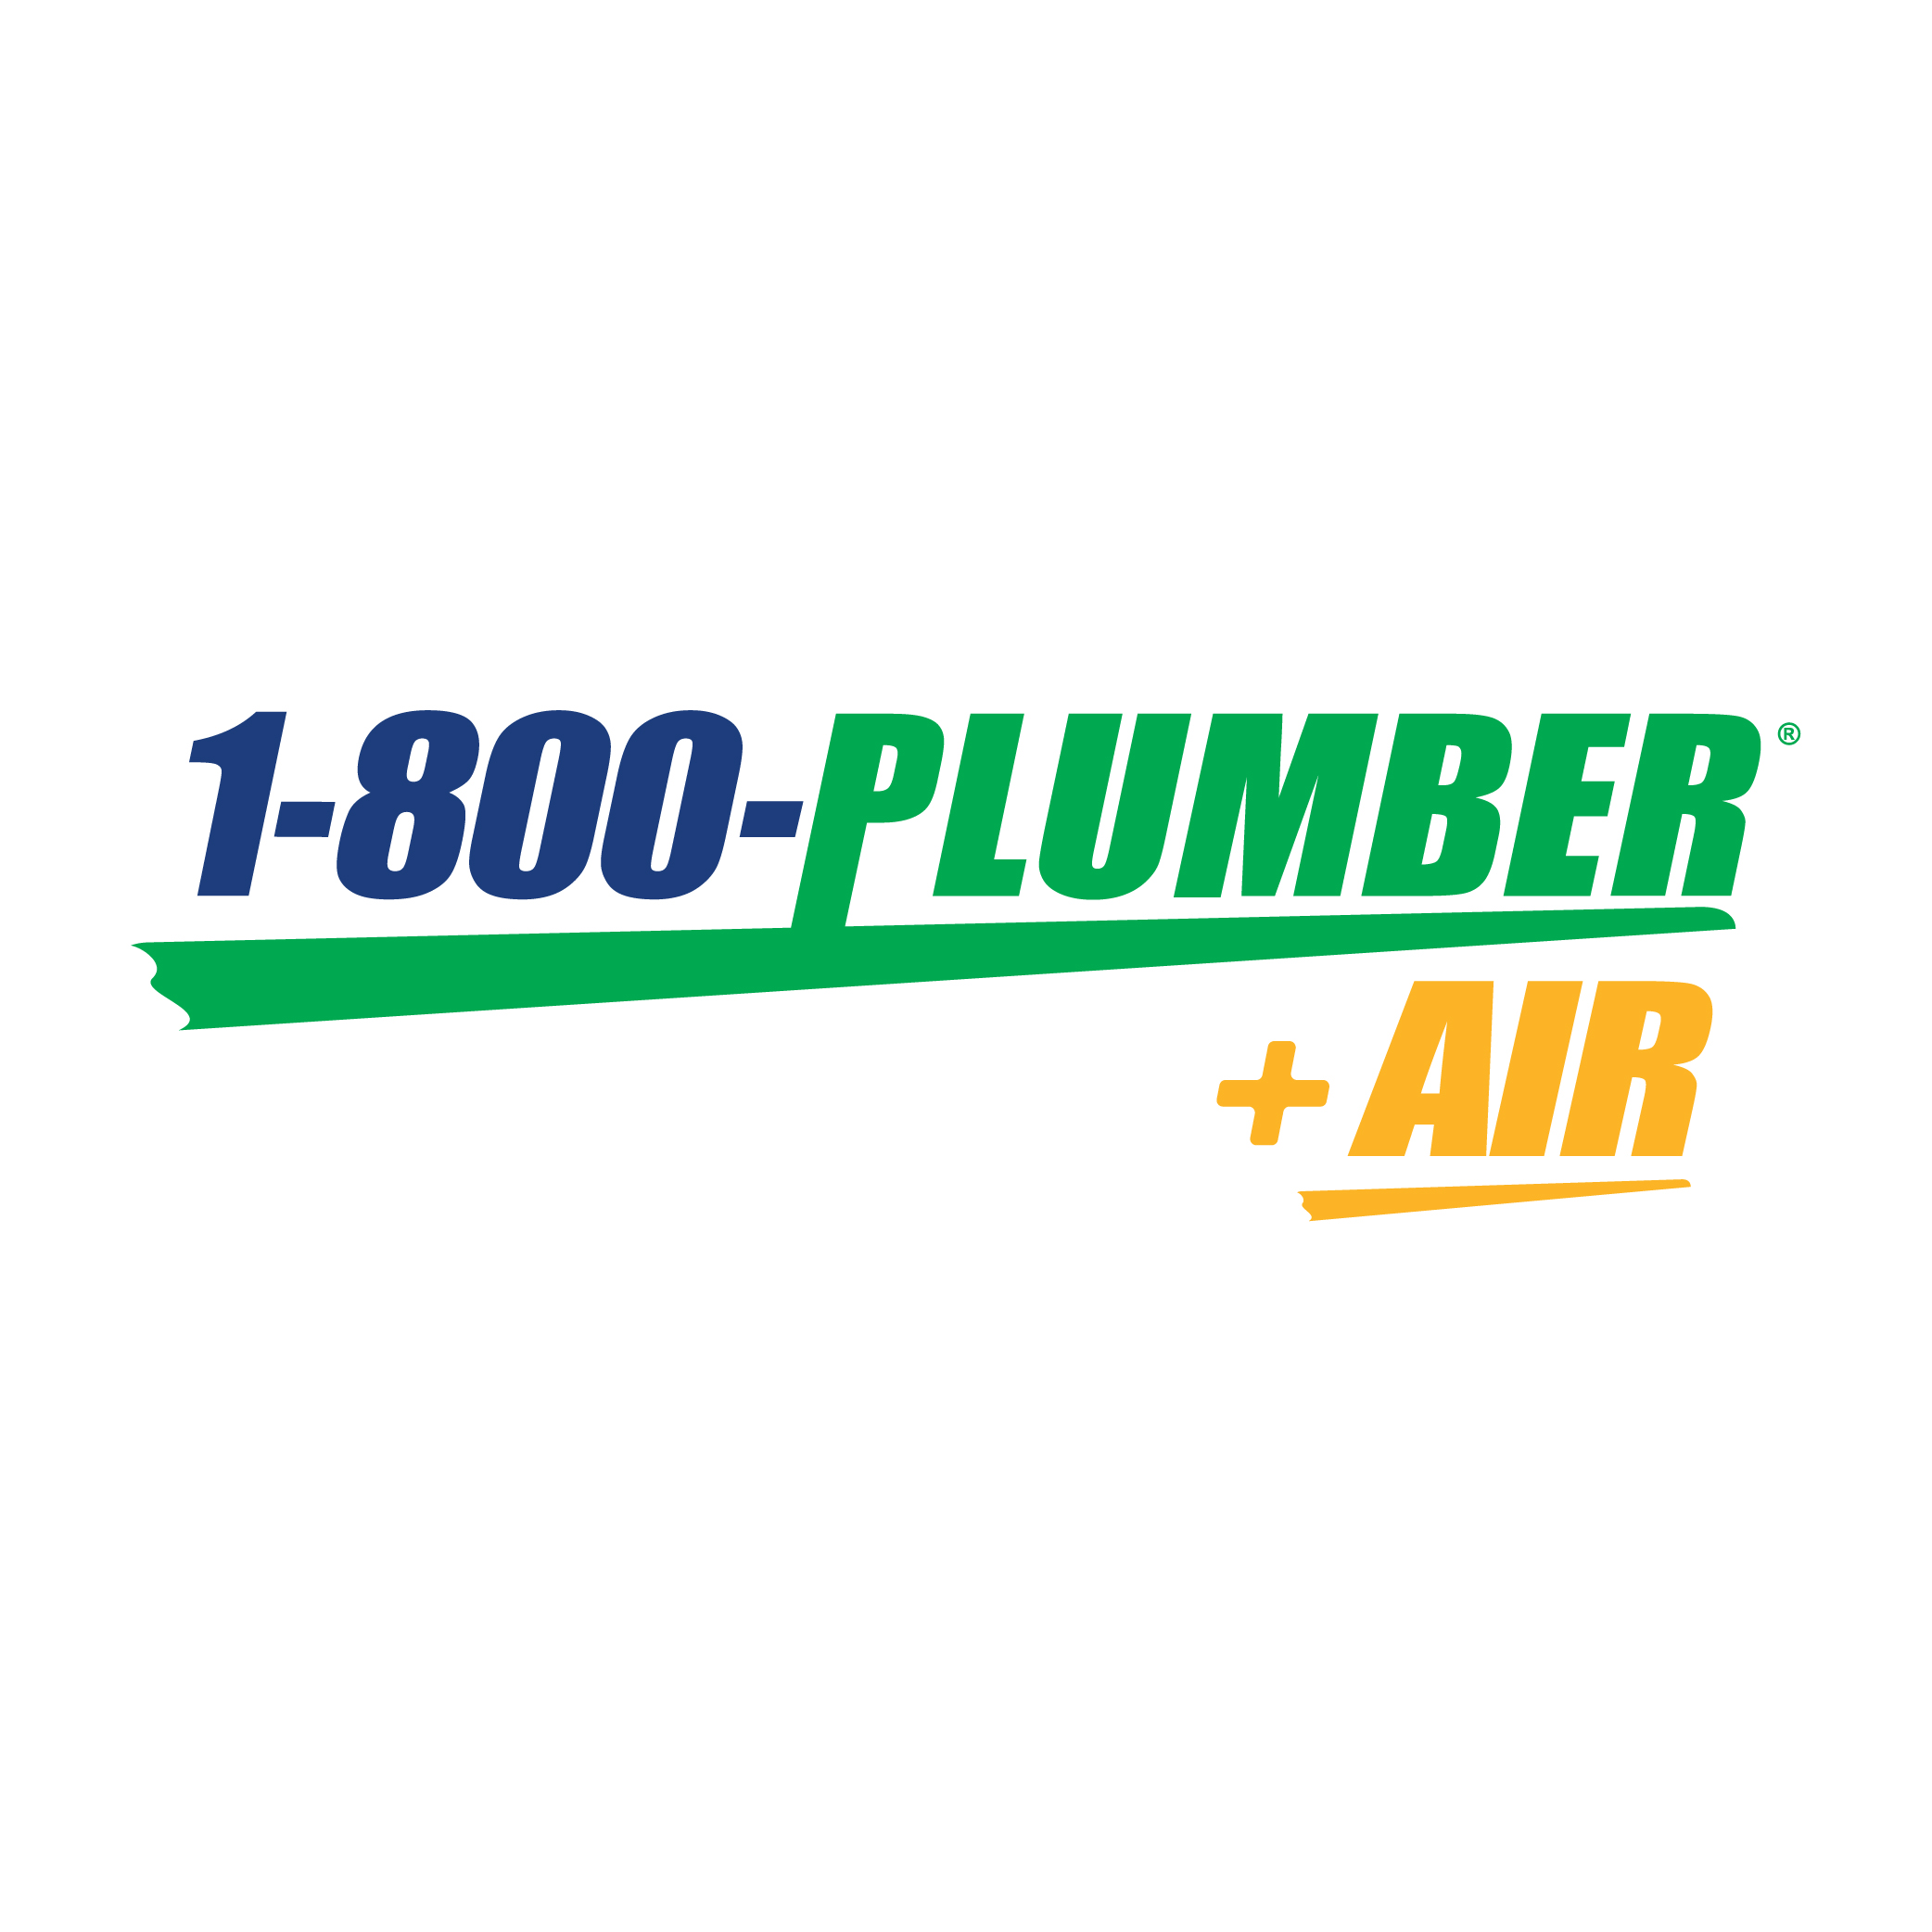 1-800 Plumber + Air of Northwest Houston Logo